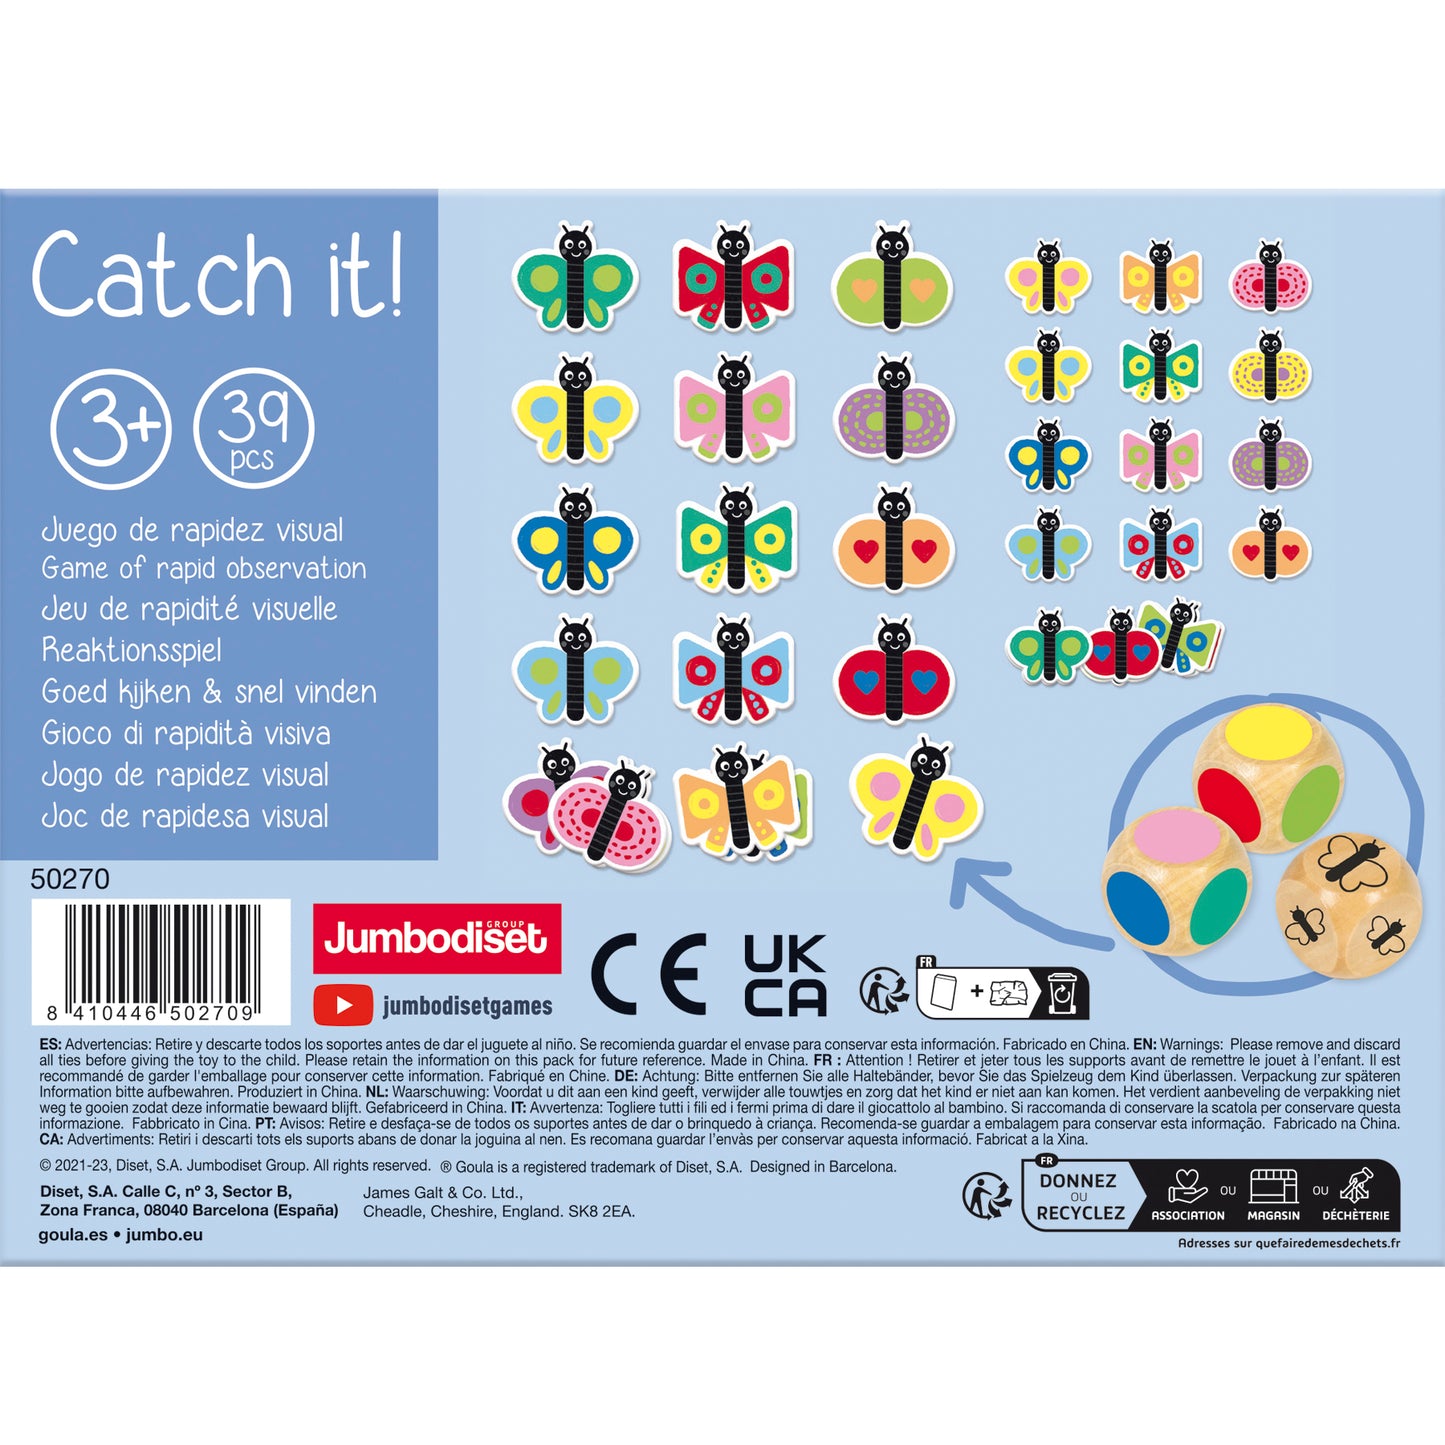 Catch it! Butterflies - product image - Jumboplay.com